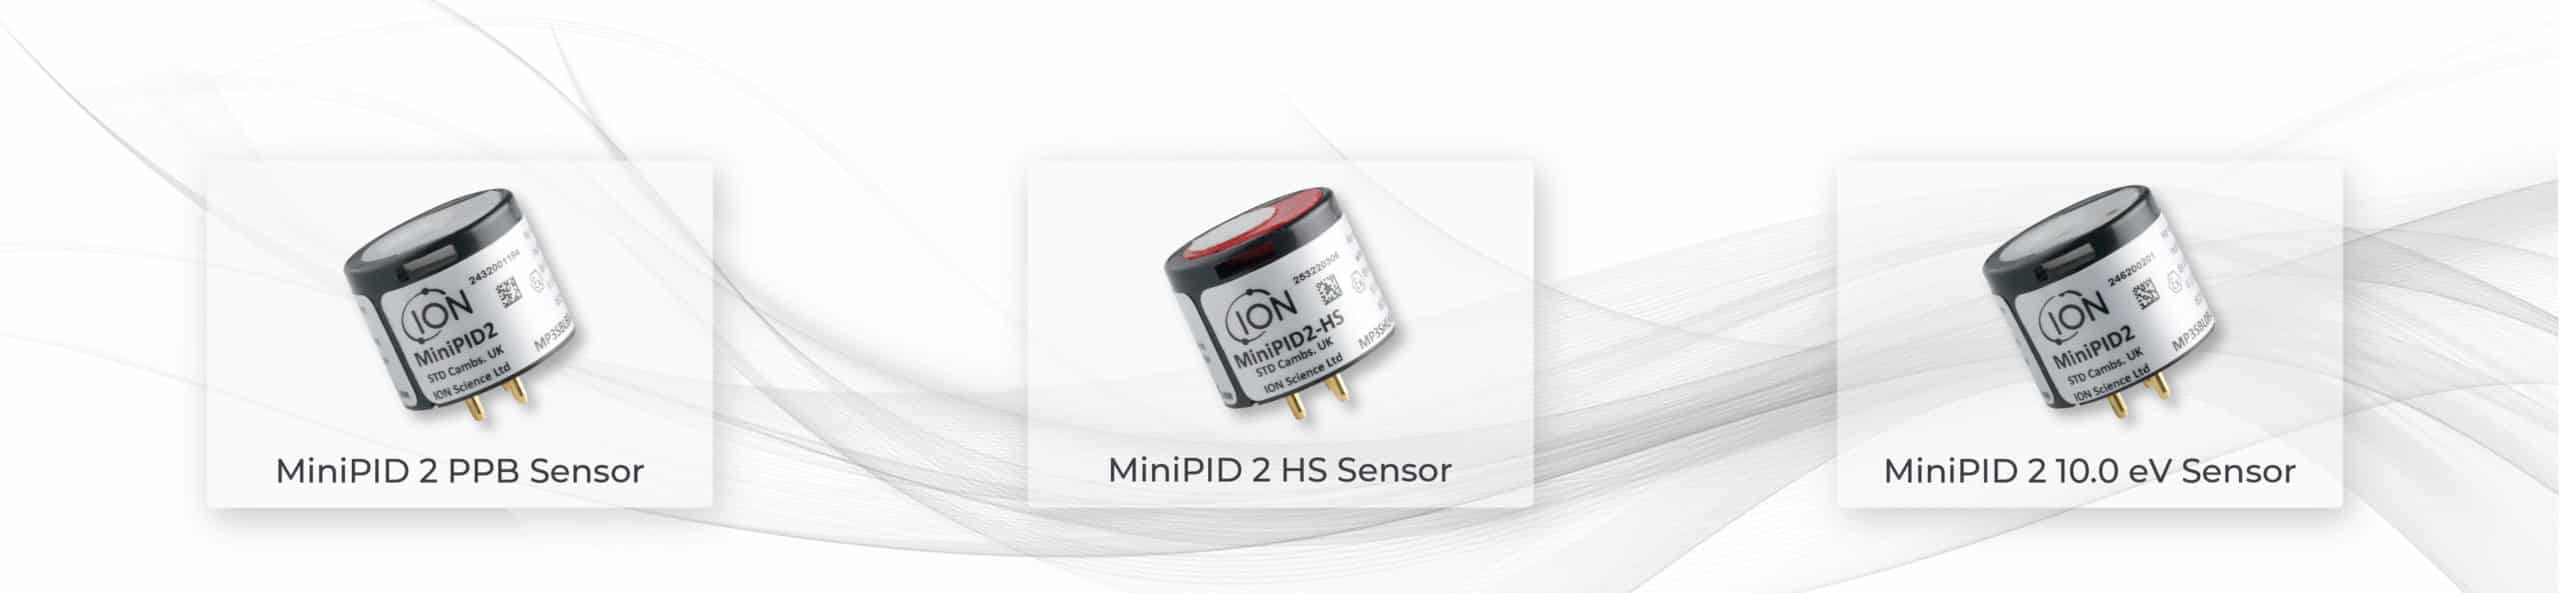 PID sensor technology variants